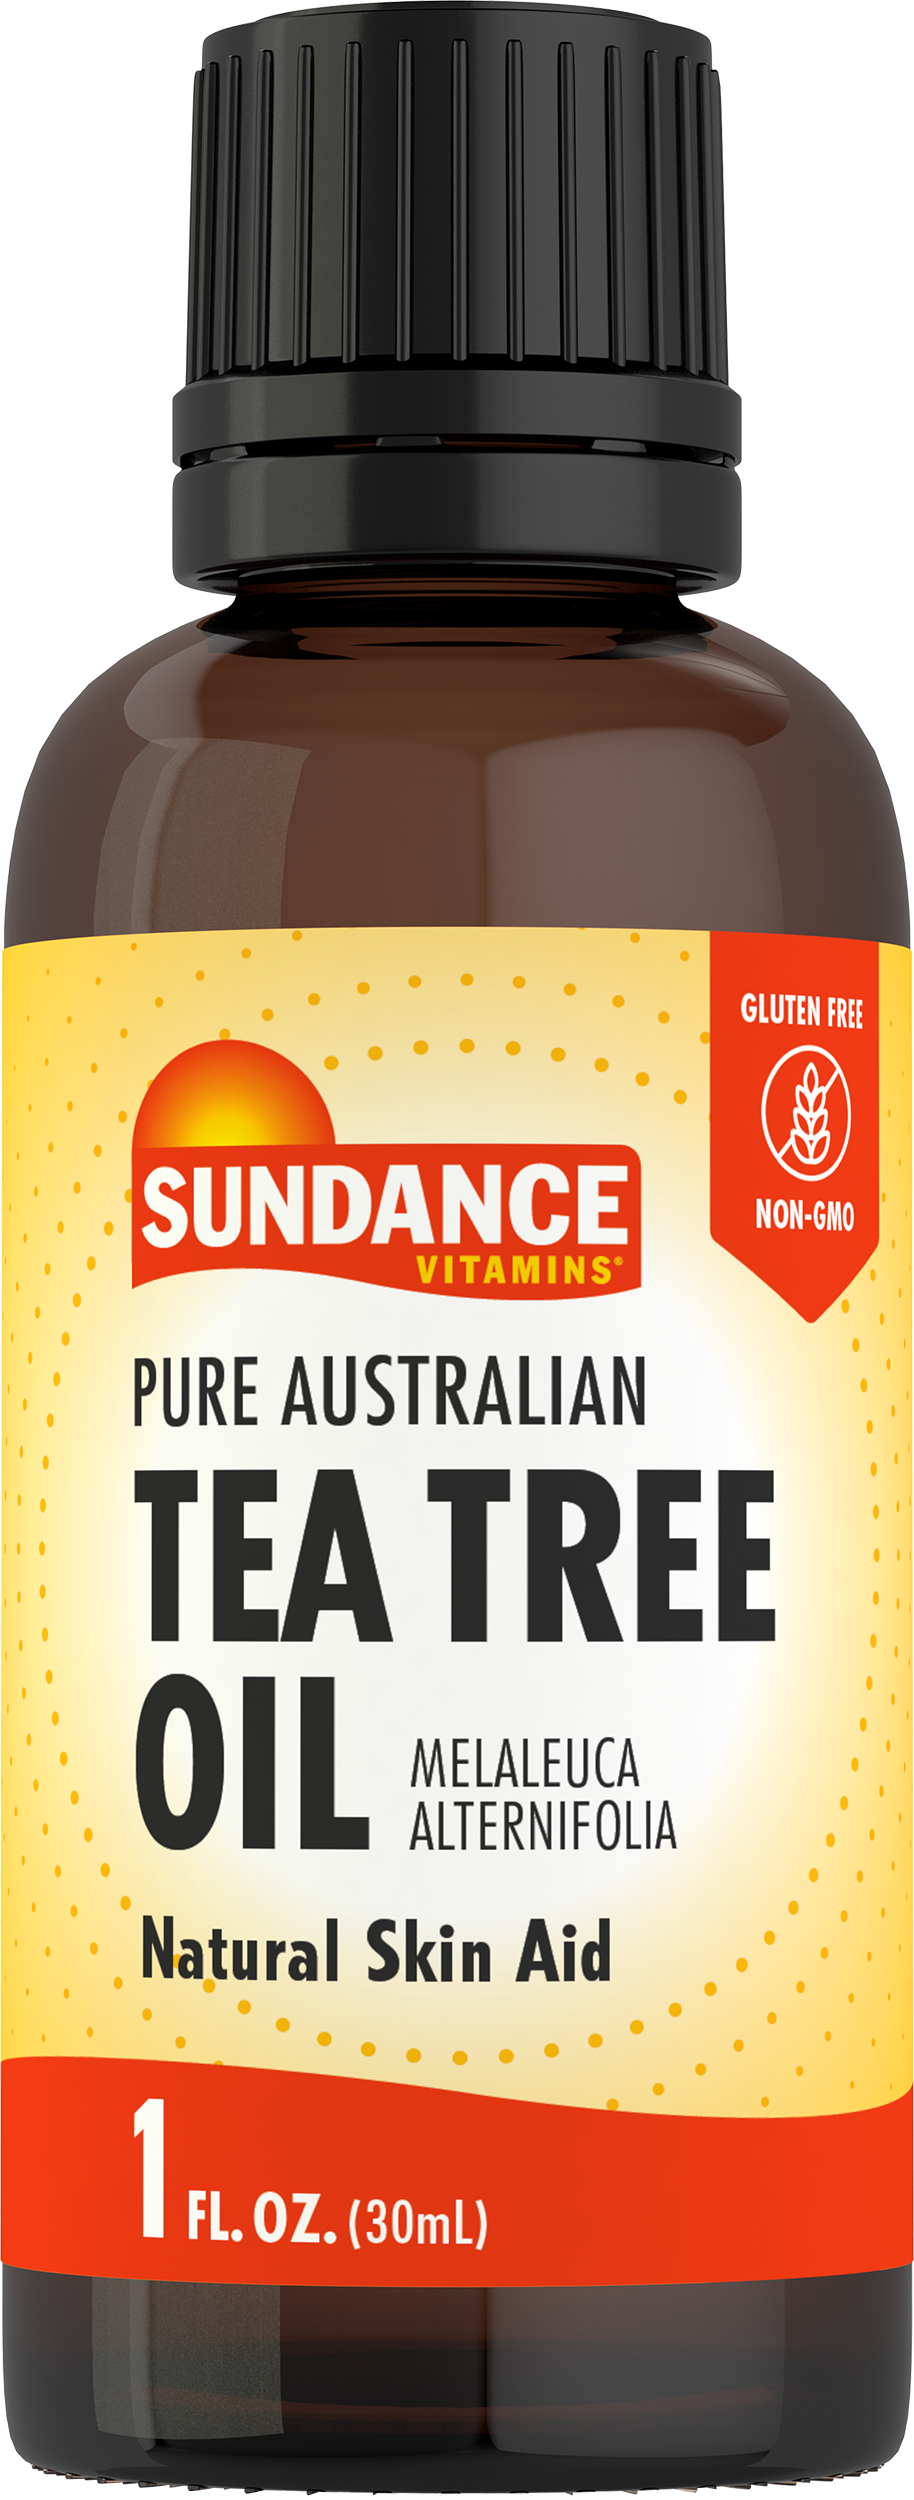 Pure Australian Tea Tree Oil